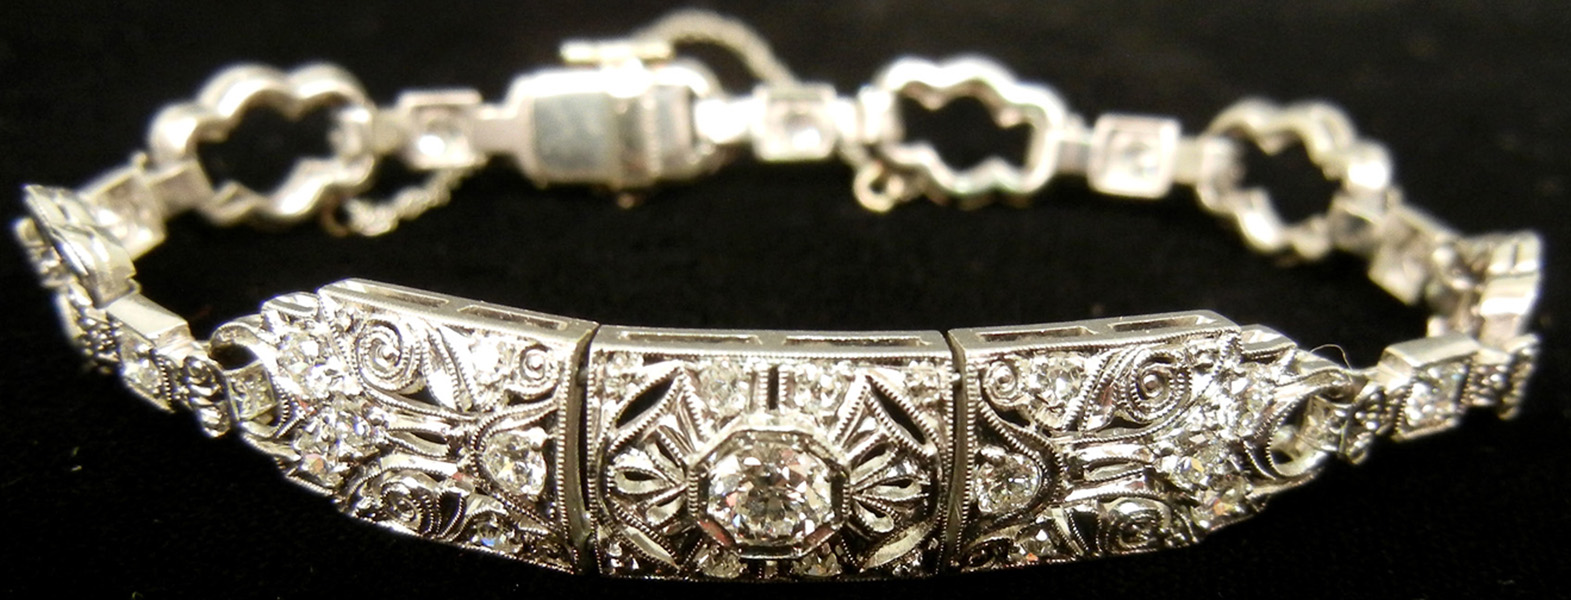 Platinum and diamond bracelet. Stephenson’s image.